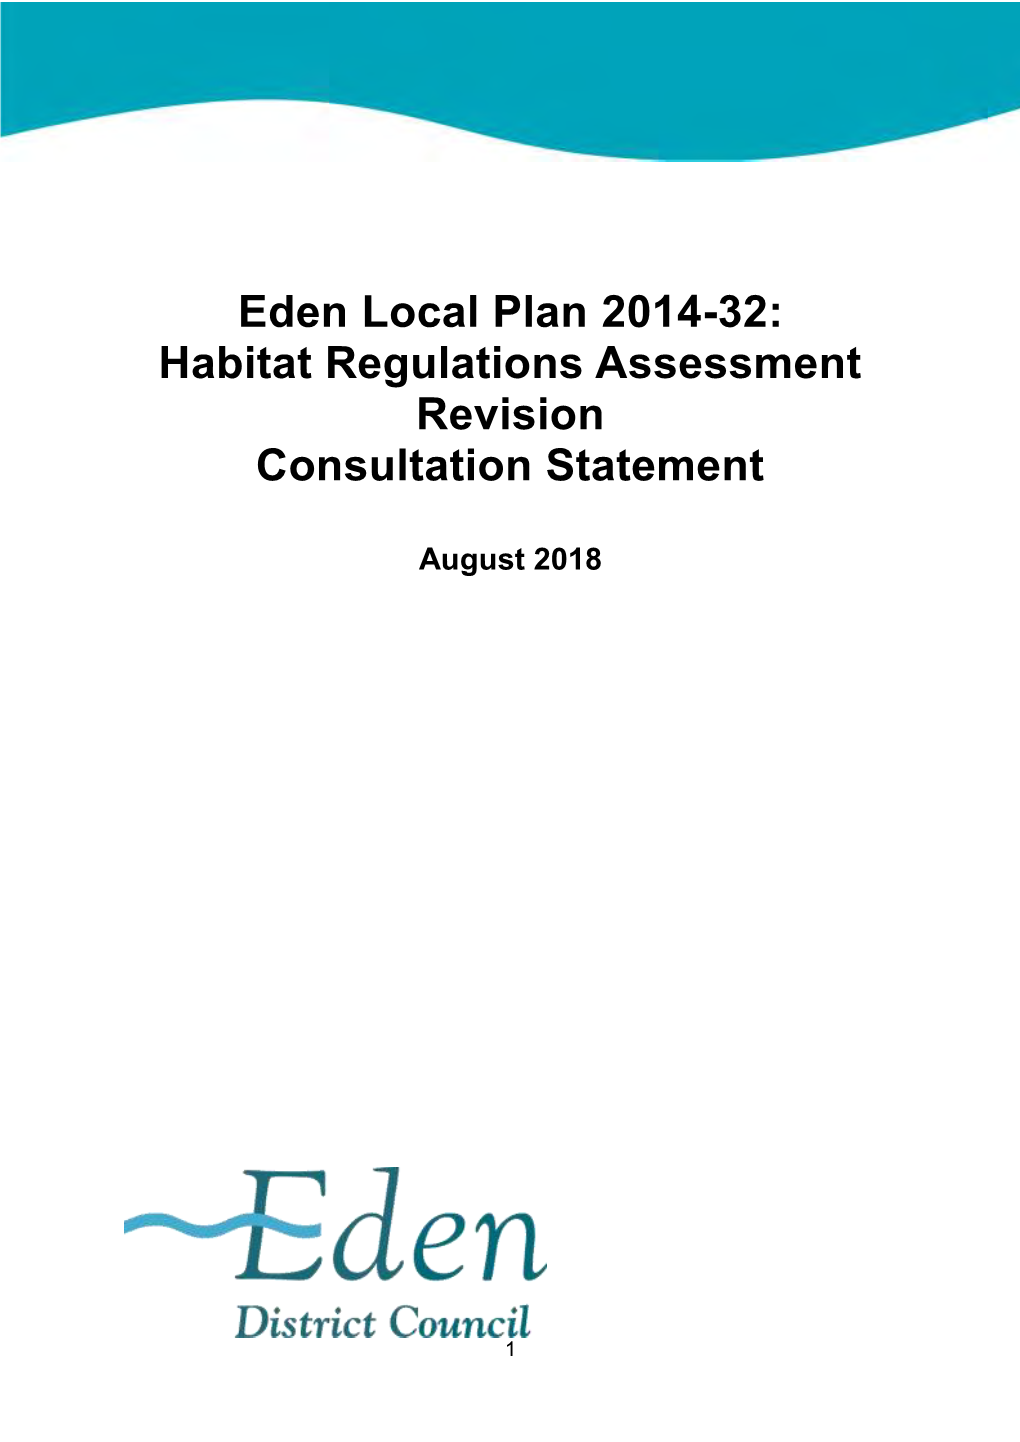 Habitat Regulations Assessment Revision Consultation Statement